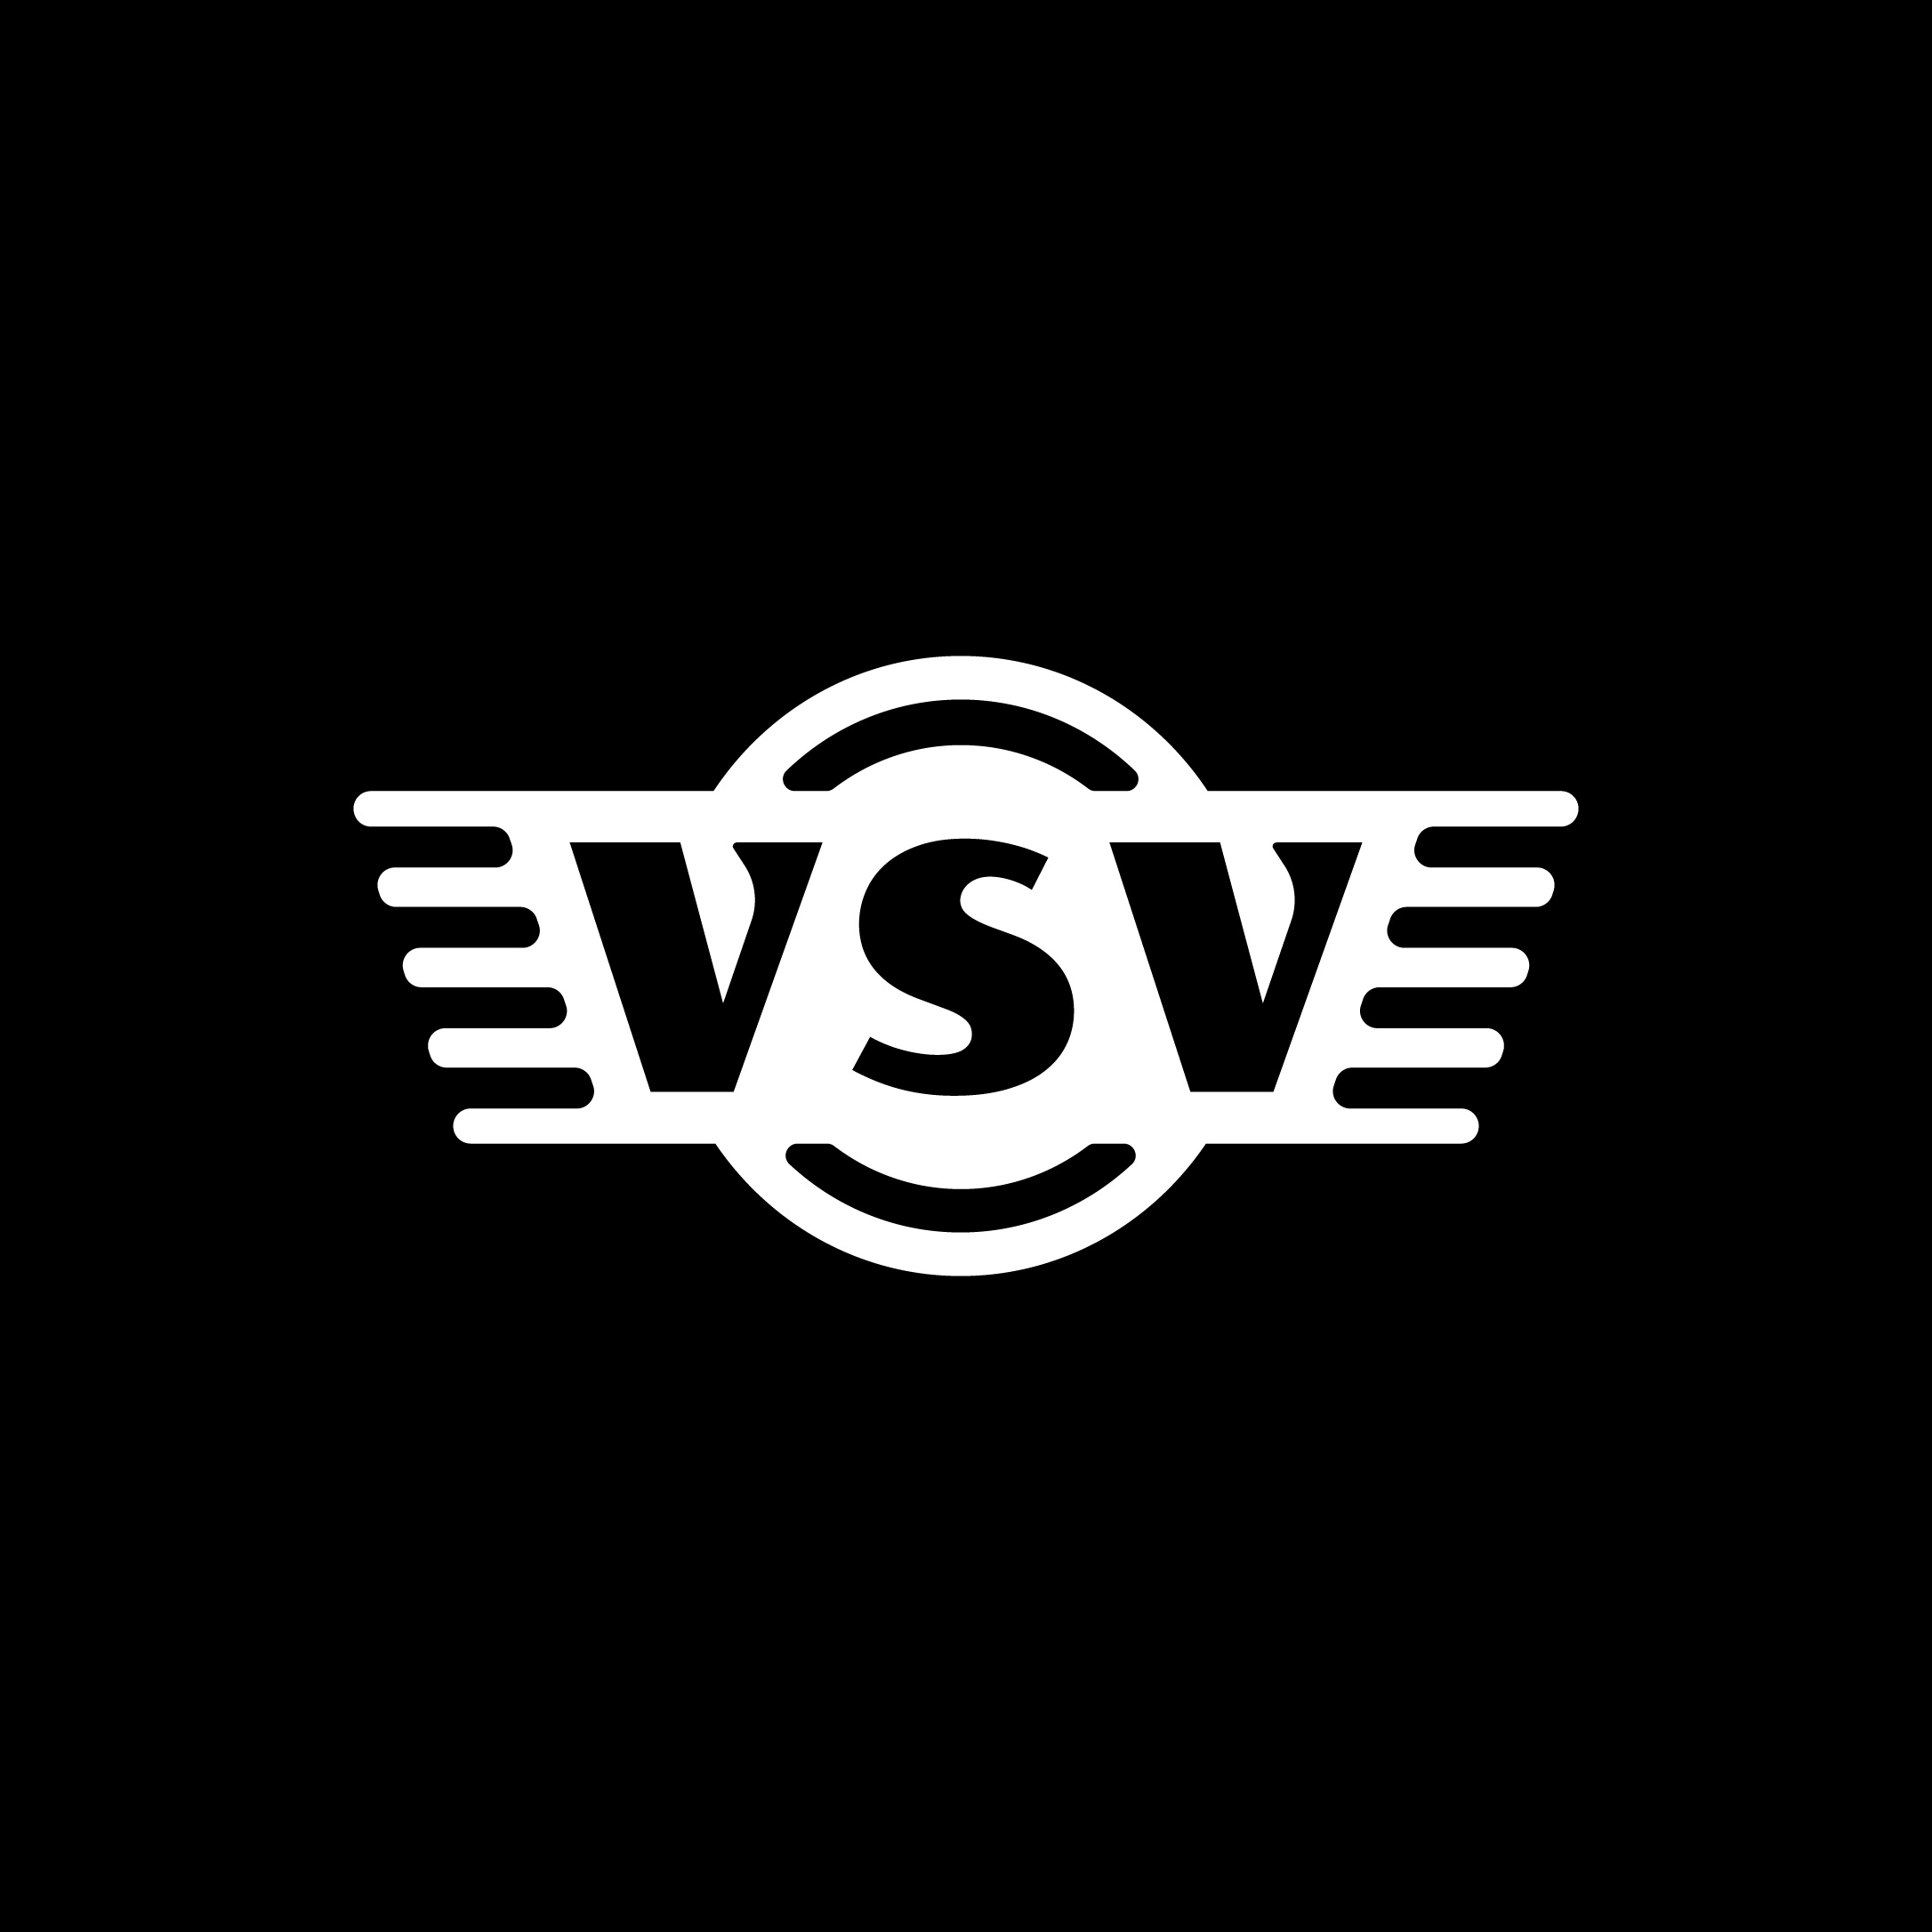 vans vintage logo